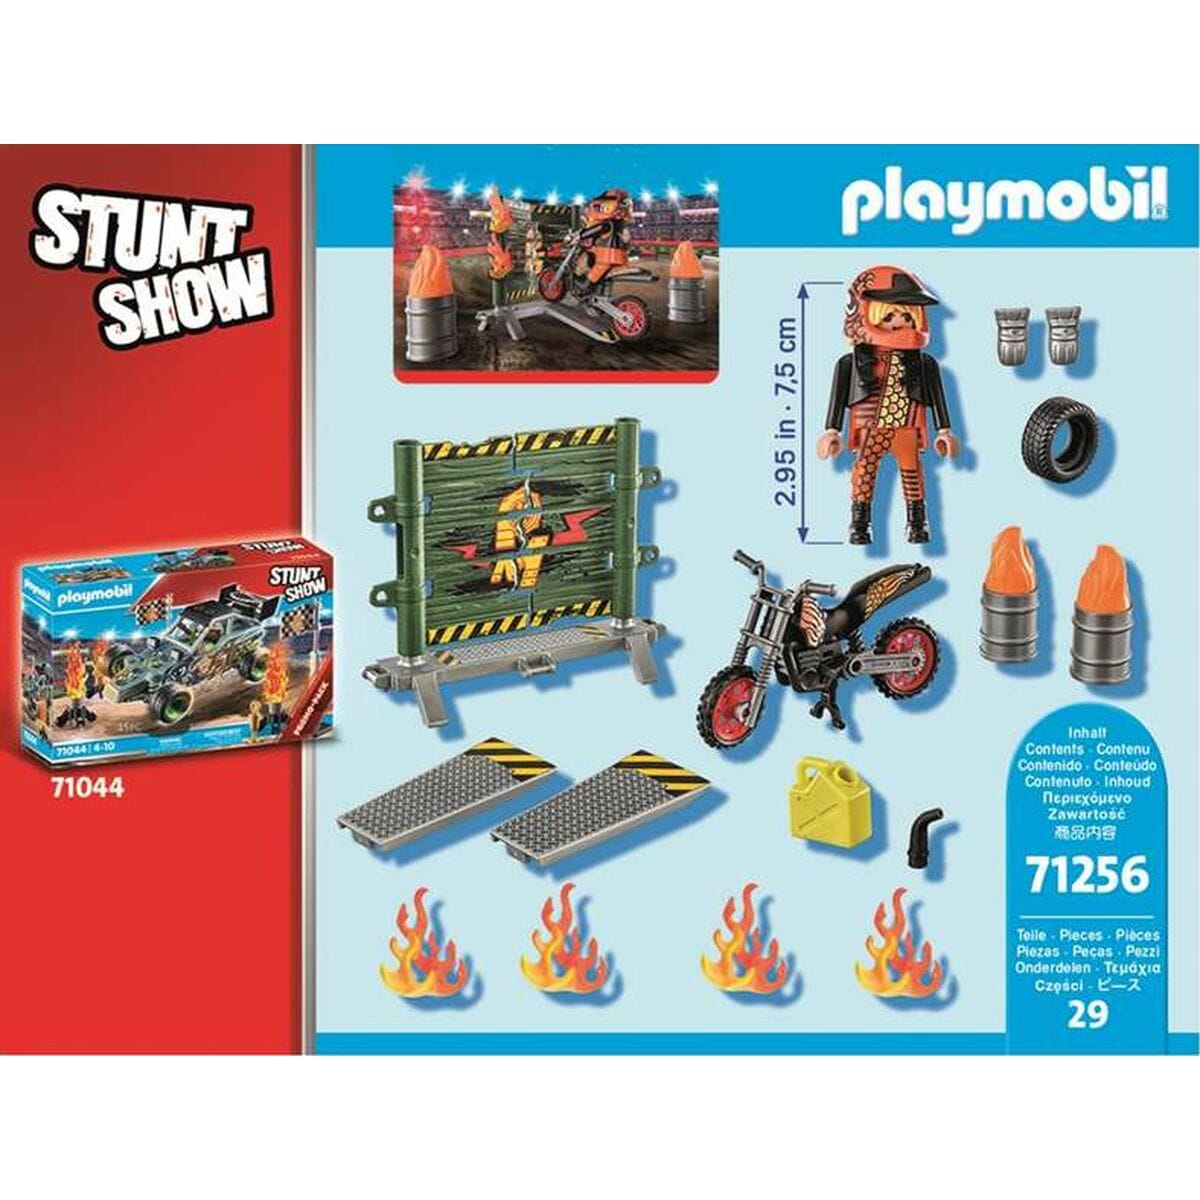 Playmobil Spielzeug | Kostüme > Spielzeug und Spiele > Weiteres spielzeug Playset Playmobil 71256 Stuntshow 29 Stücke